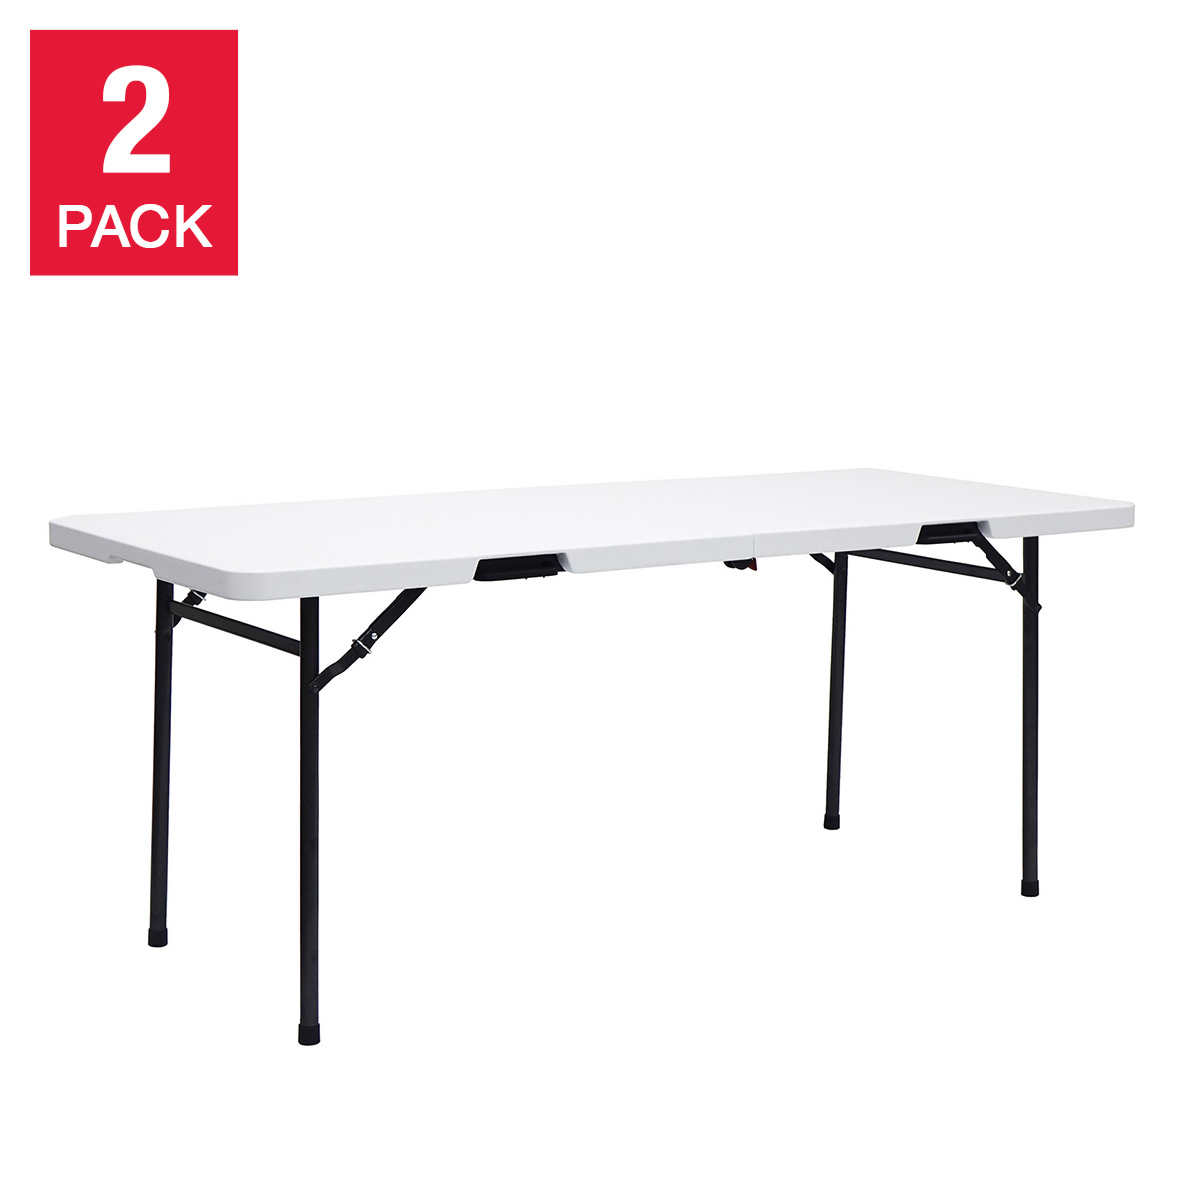 6 ft. Length Centre Folding Plastic Foldable Table in White